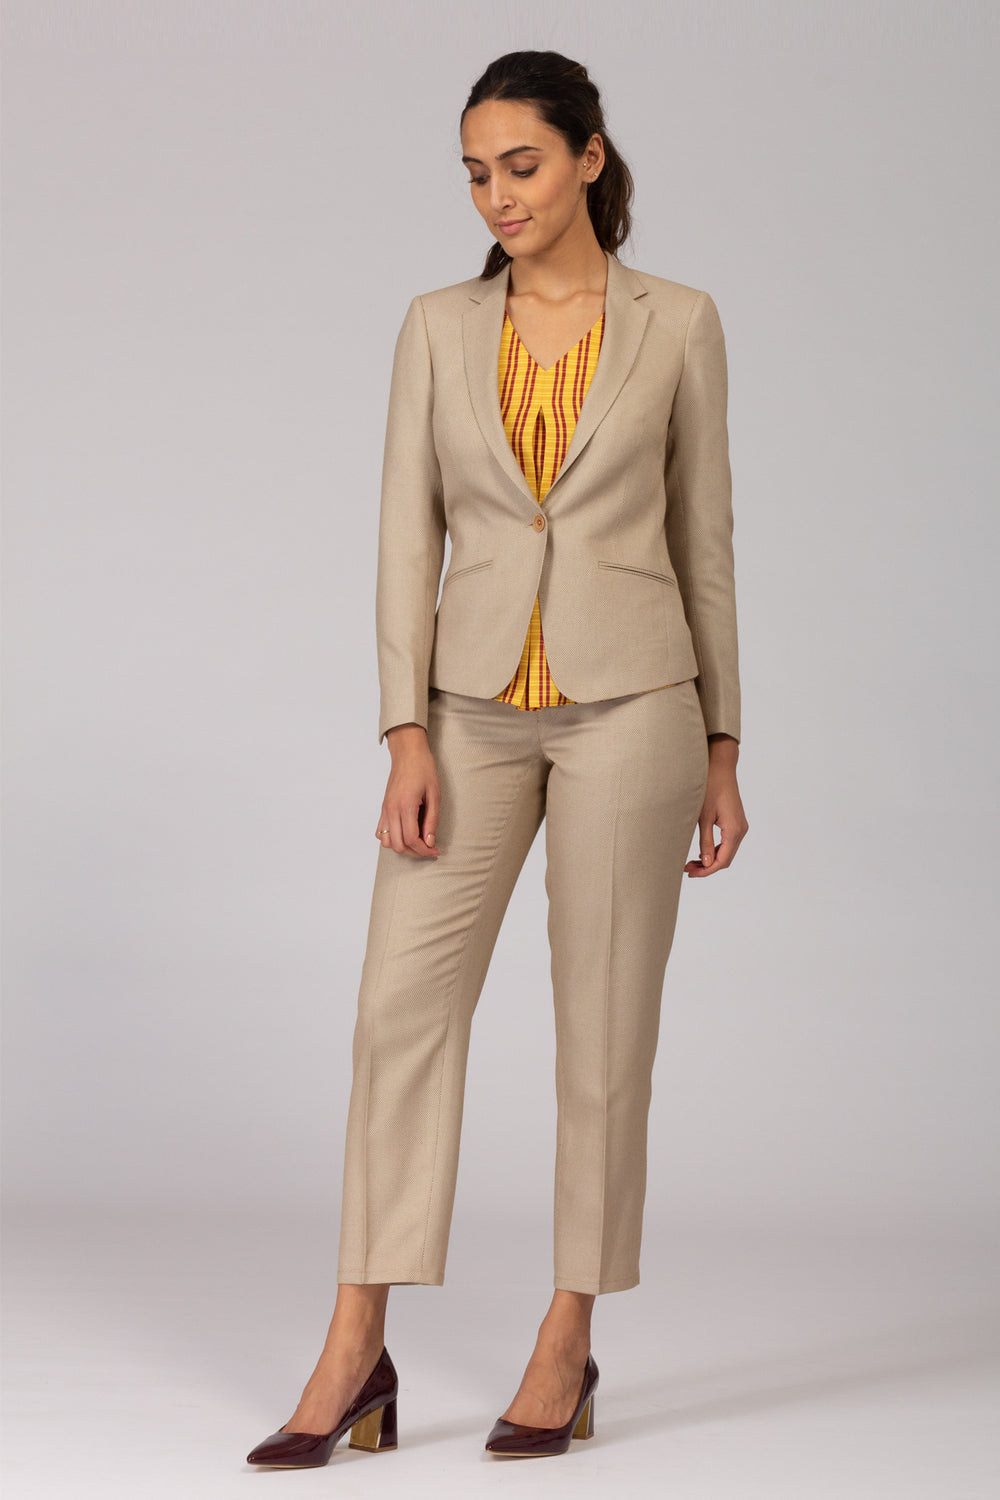 Buy LISUEYNE Womens Two Pieces Blazer Office Lady Suit Set Work Blazer  Jacket and Pant Khaki81 M at Amazonin